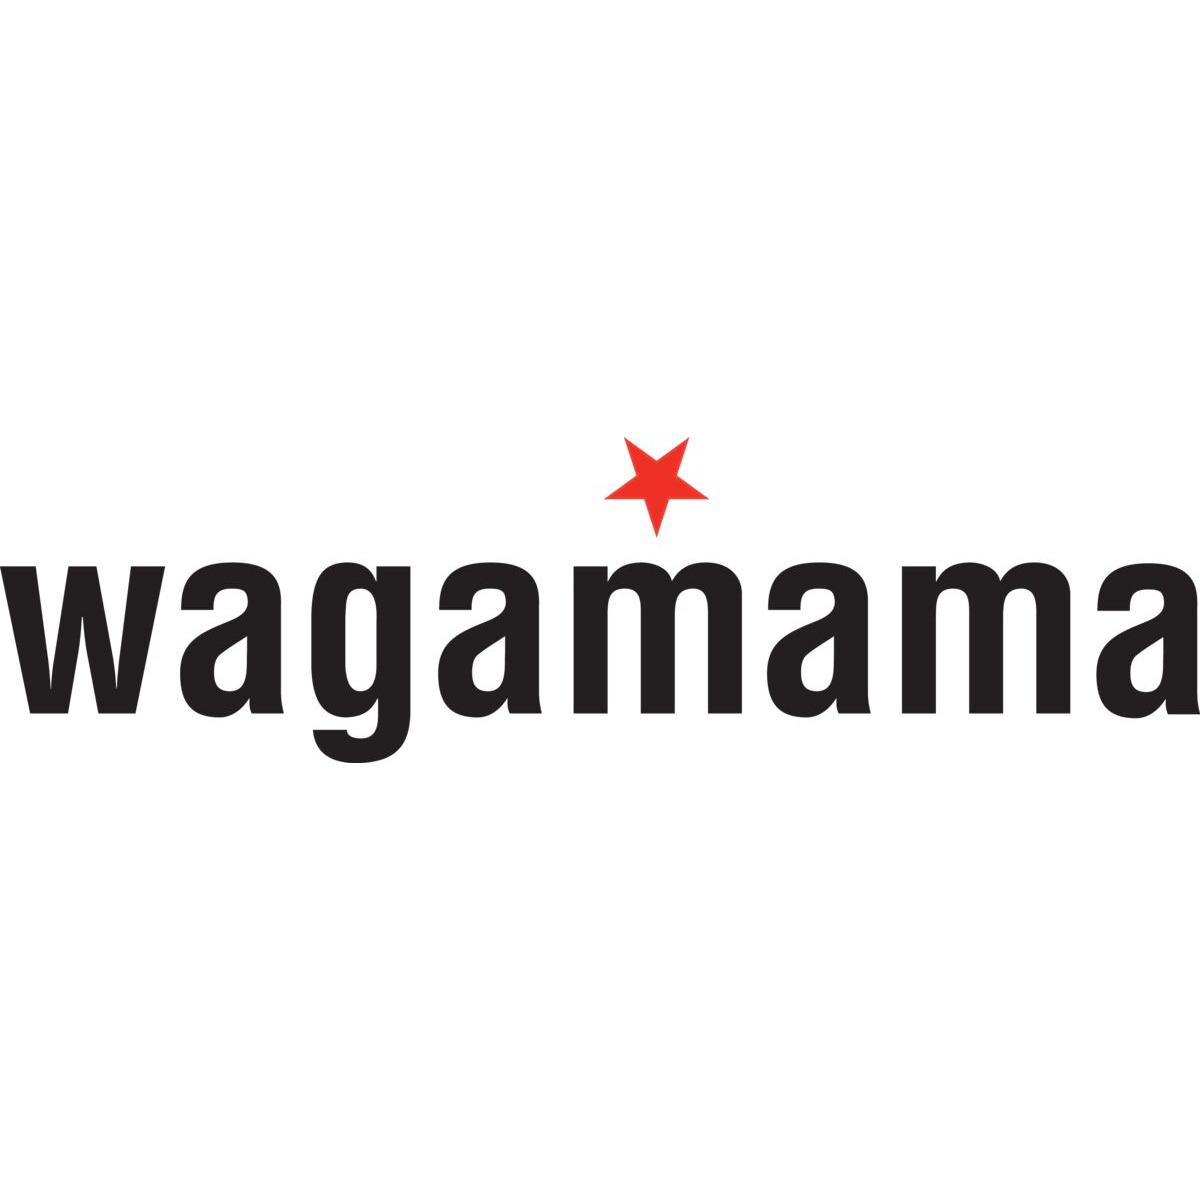 wagamama - Boston, MA 02199 - (617)778-2344 | ShowMeLocal.com